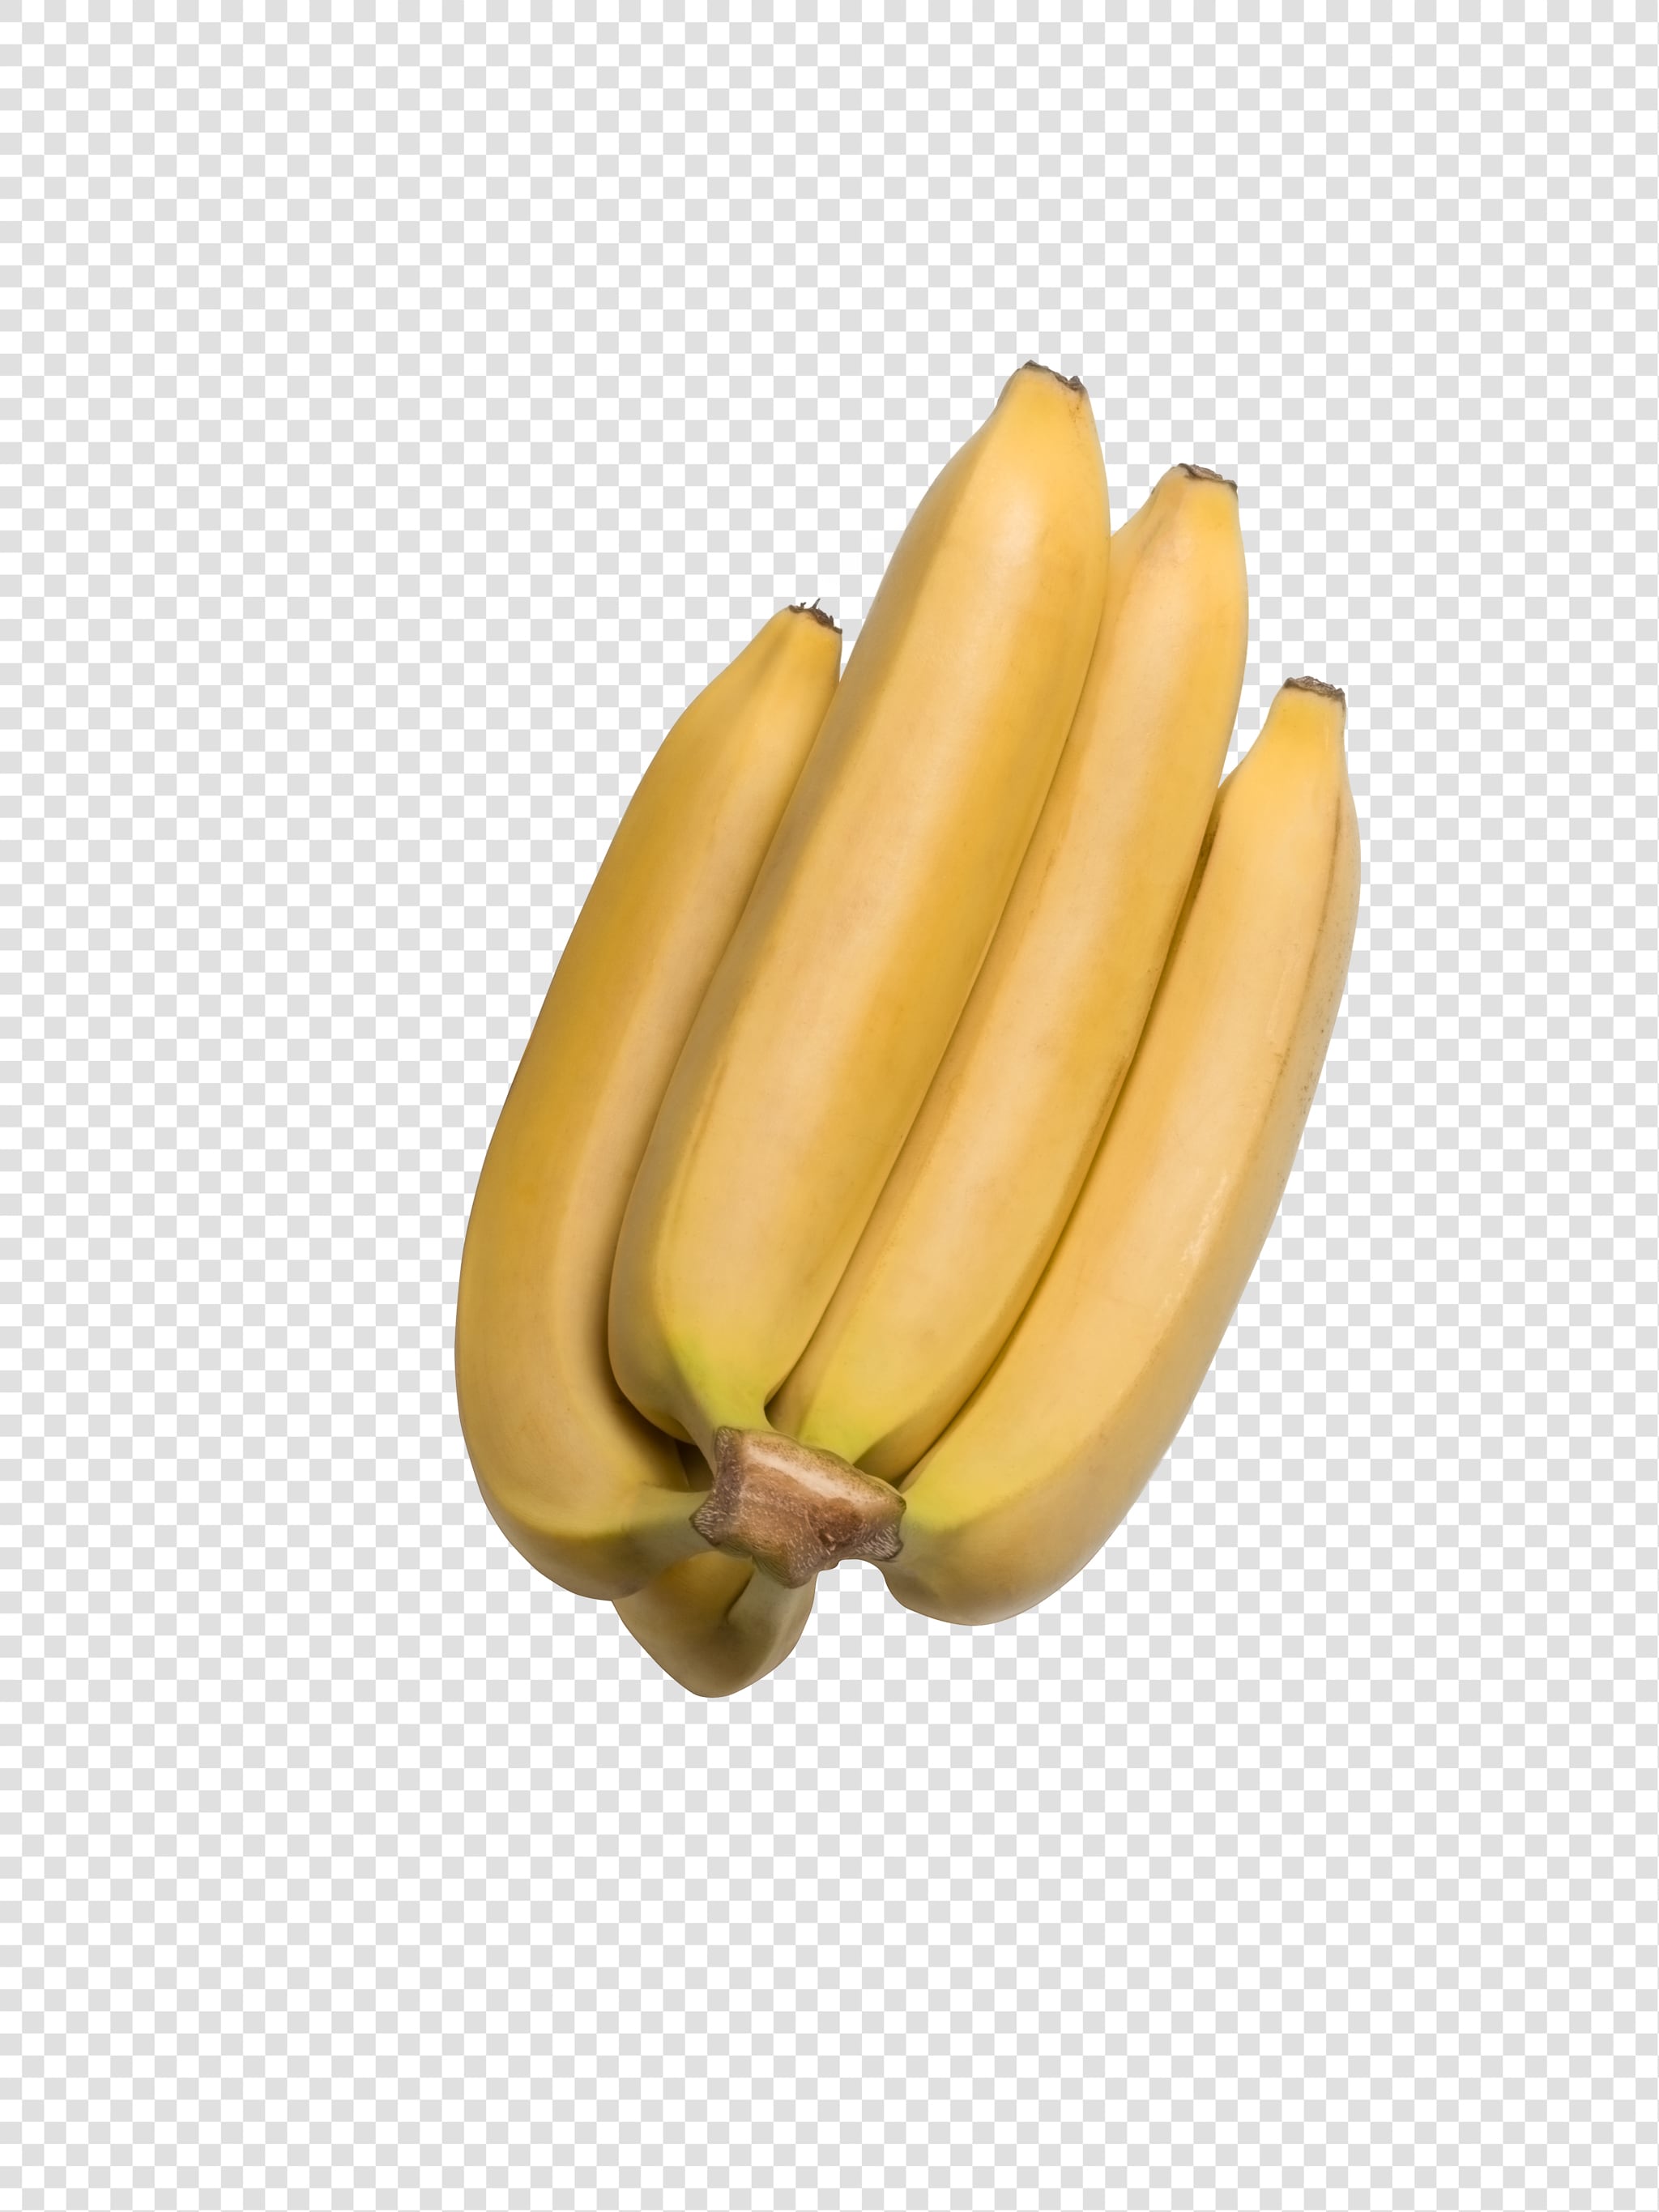 Banana image asset with transparent background